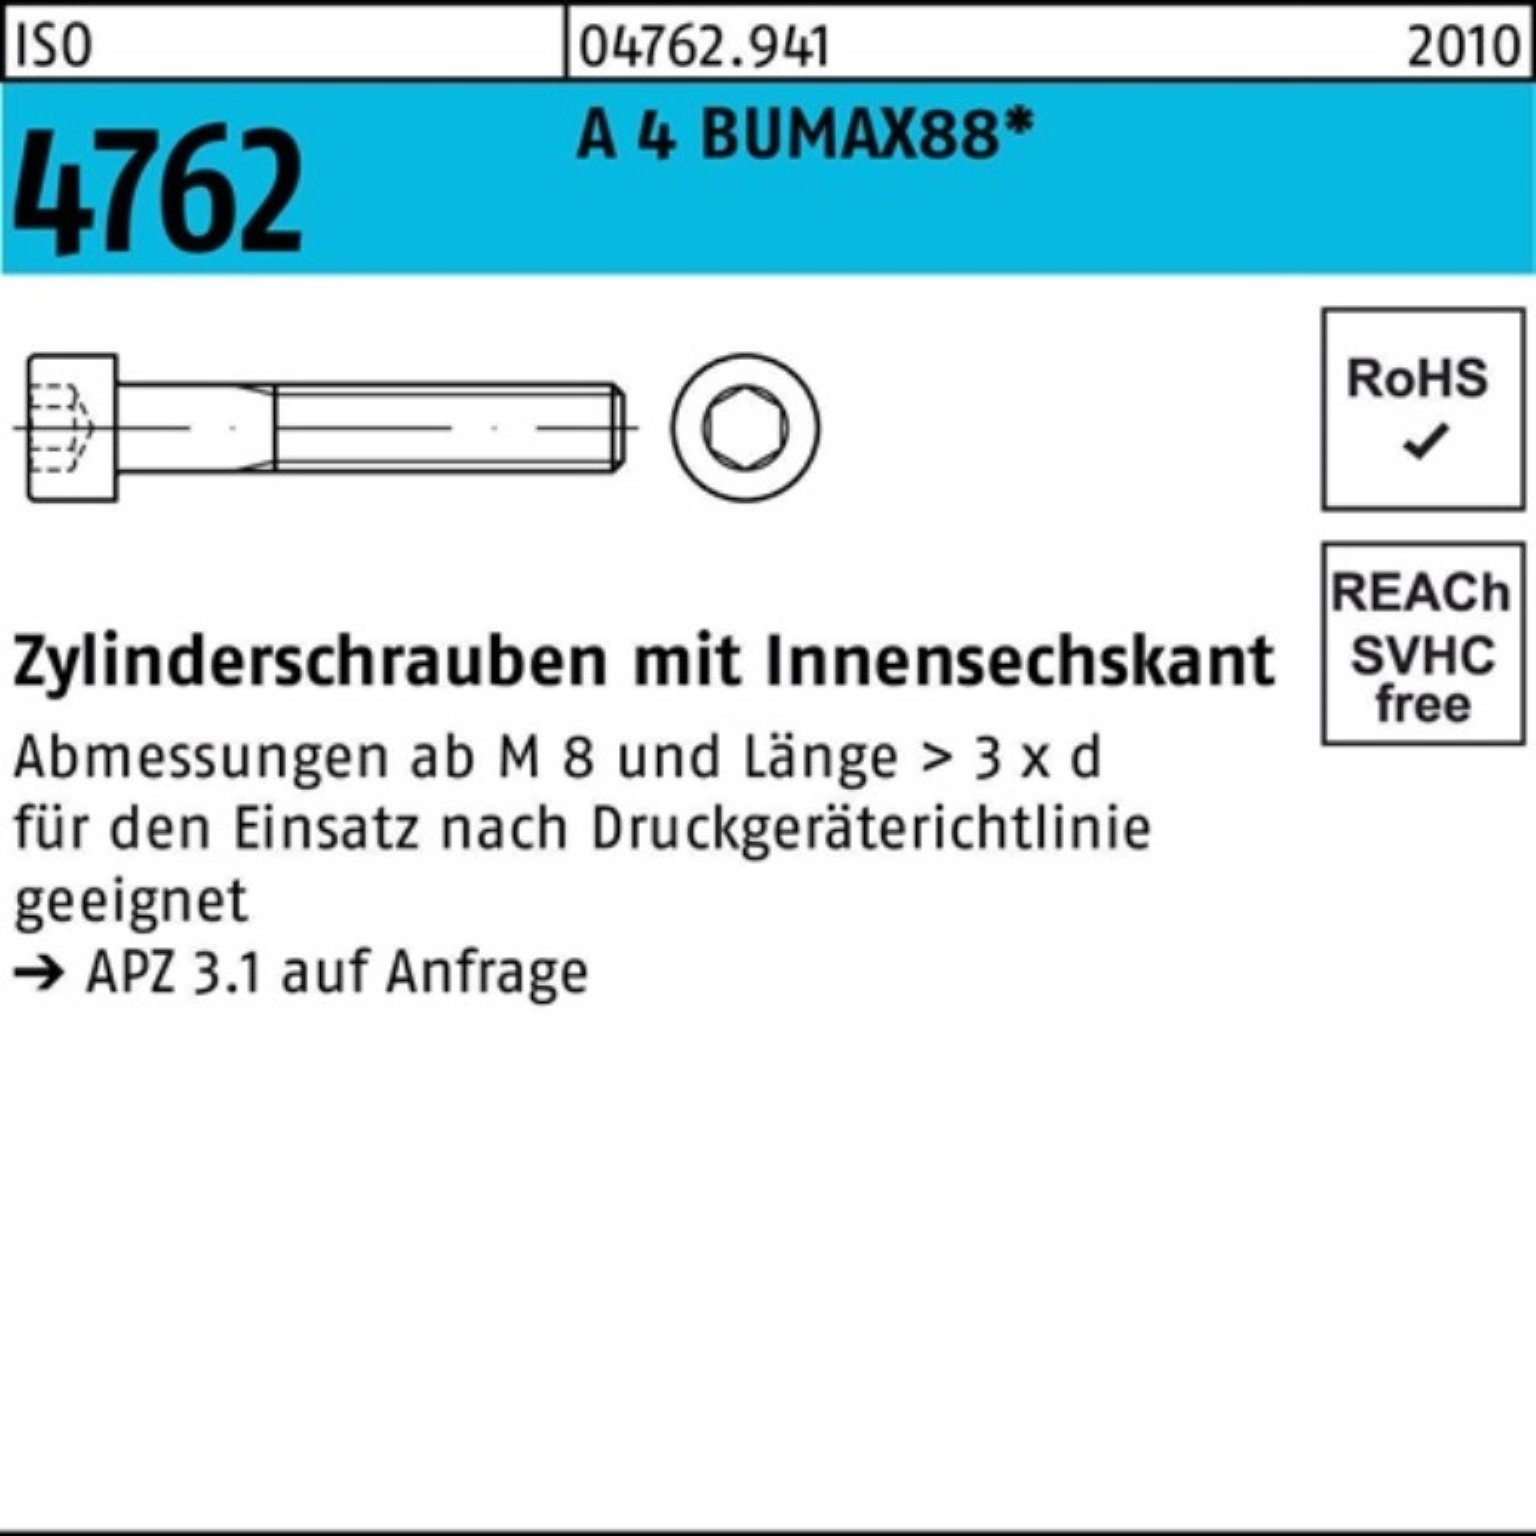 Bufab Zylinderschraube 100er Pack Zylinderschraube ISO 4762 Innen-6kt M5x 40 A 4 BUMAX88 100